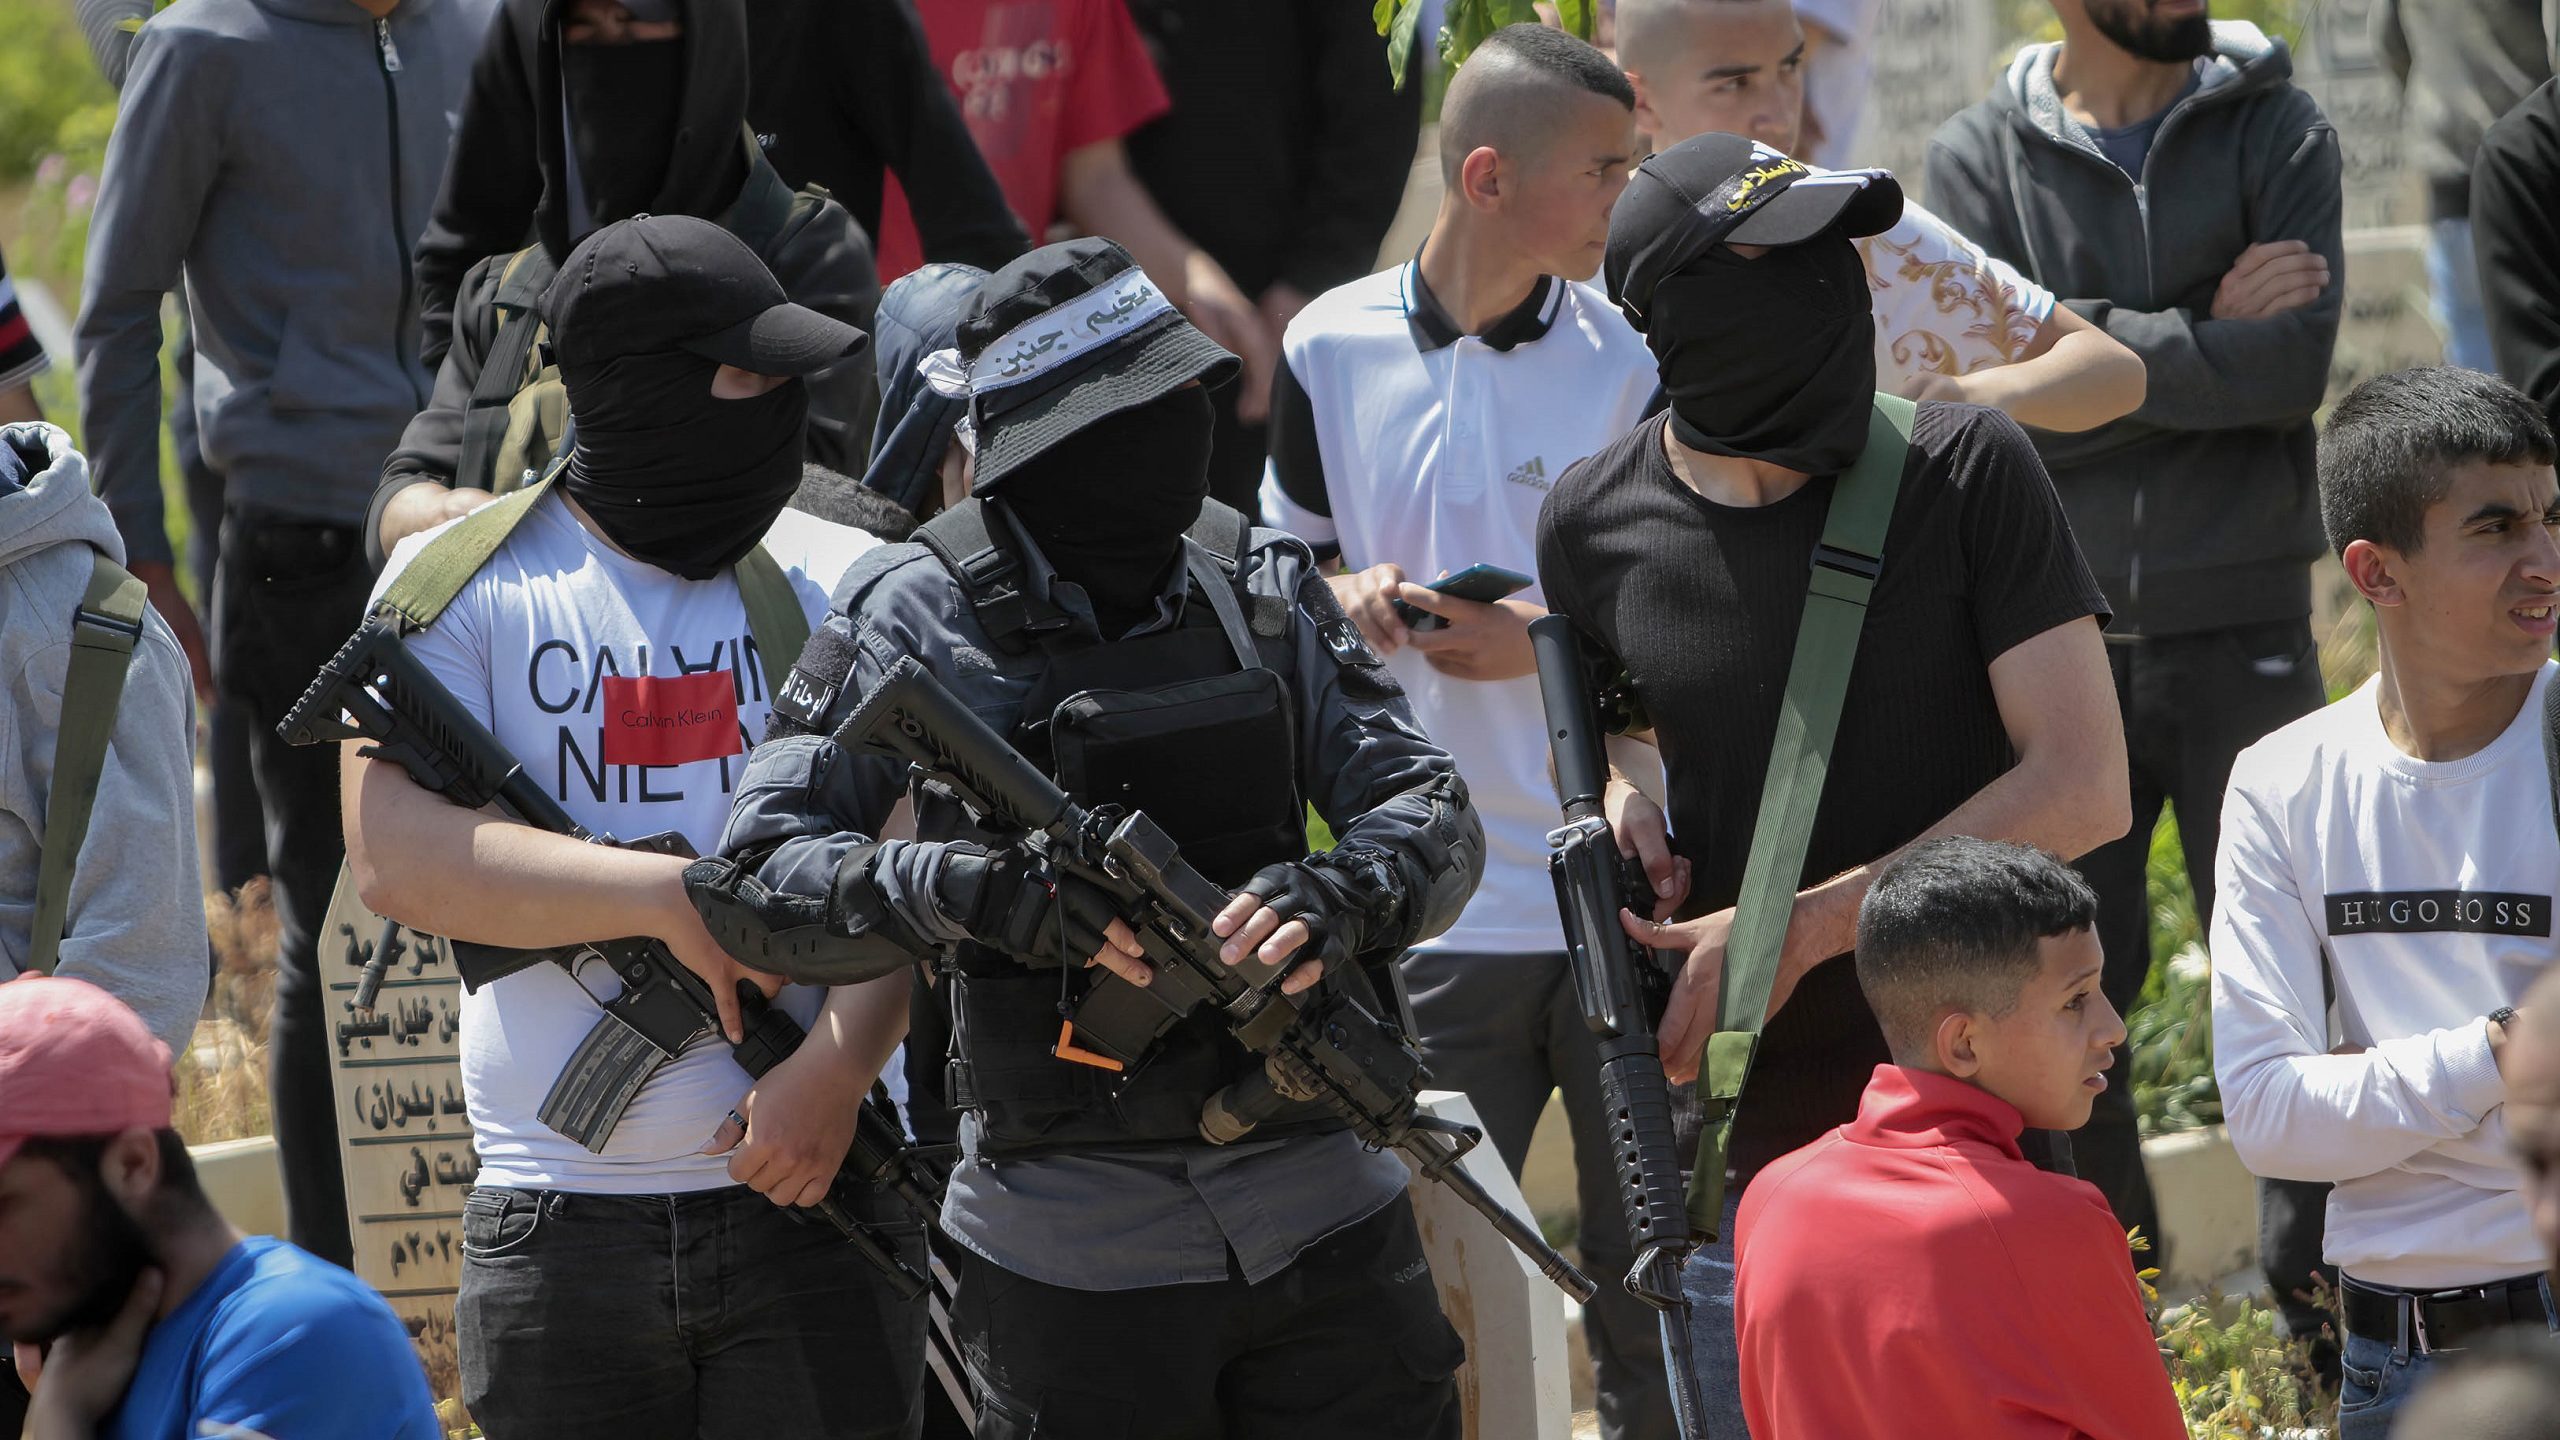 Palestinians in Jenin Area Increasingly Alienated From PA Leadership